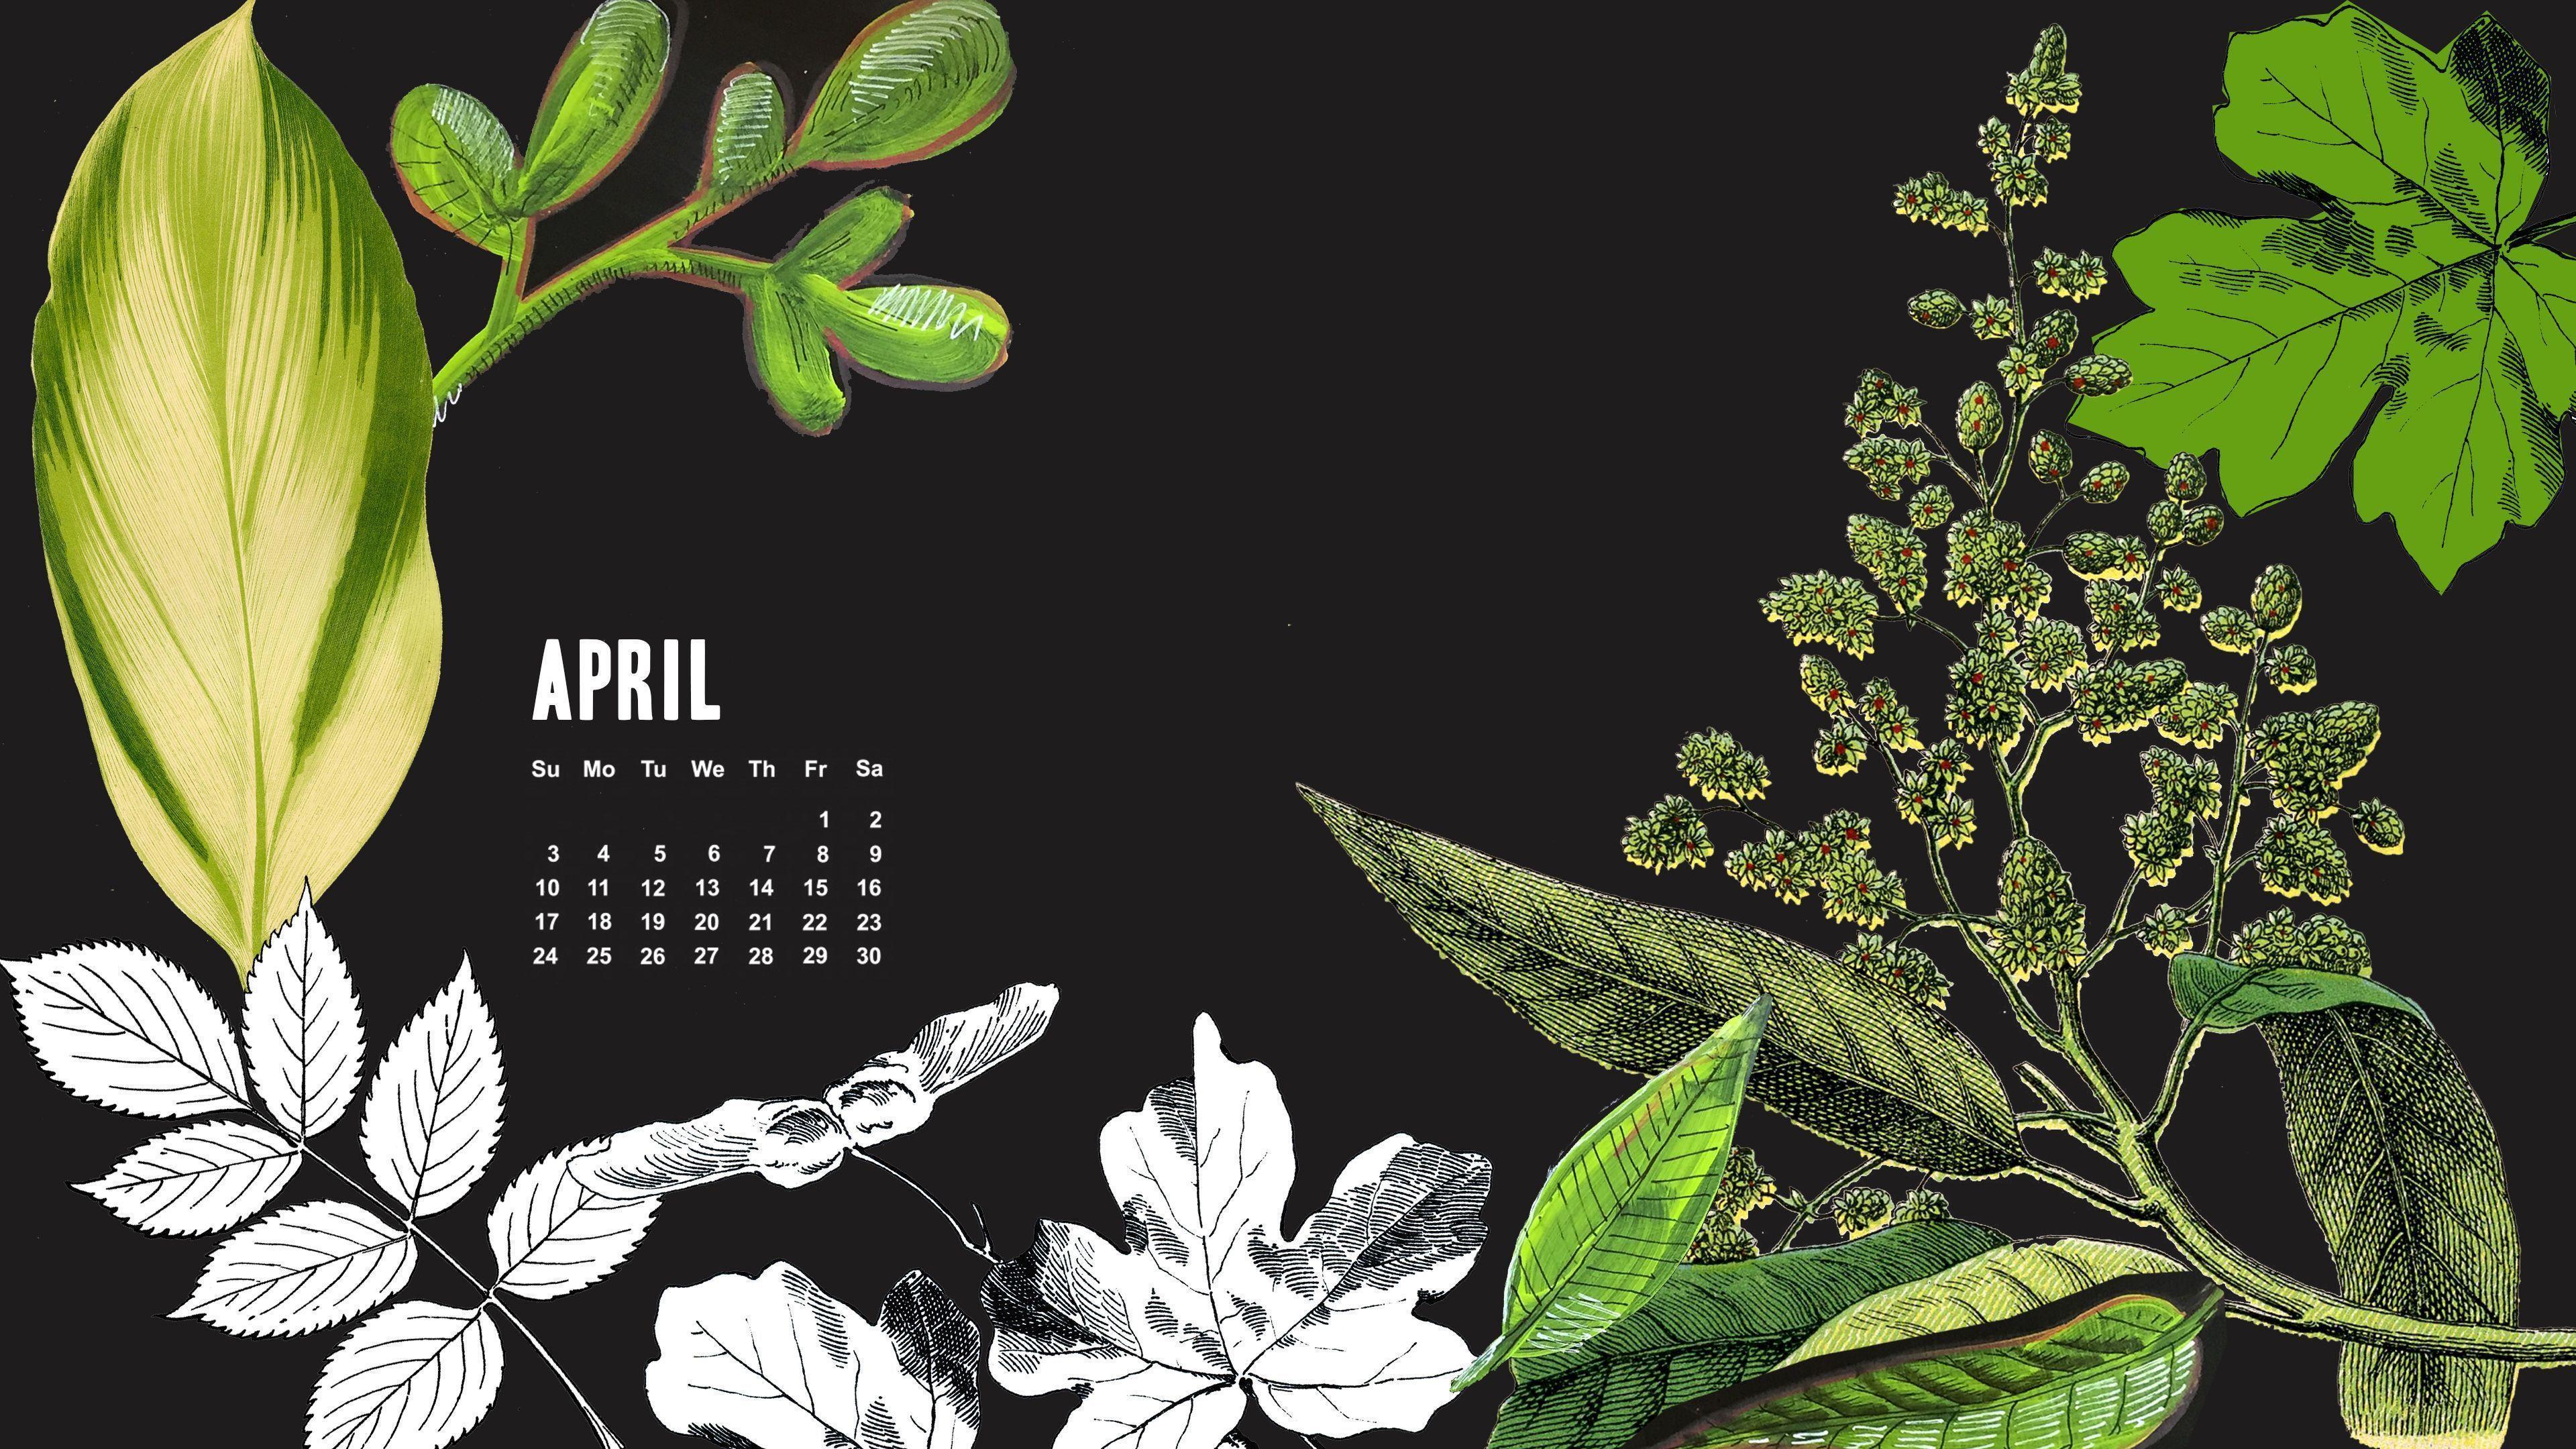 Giants & Pilgrims. April Free Calendar Desktop and iPhone Wallpaper